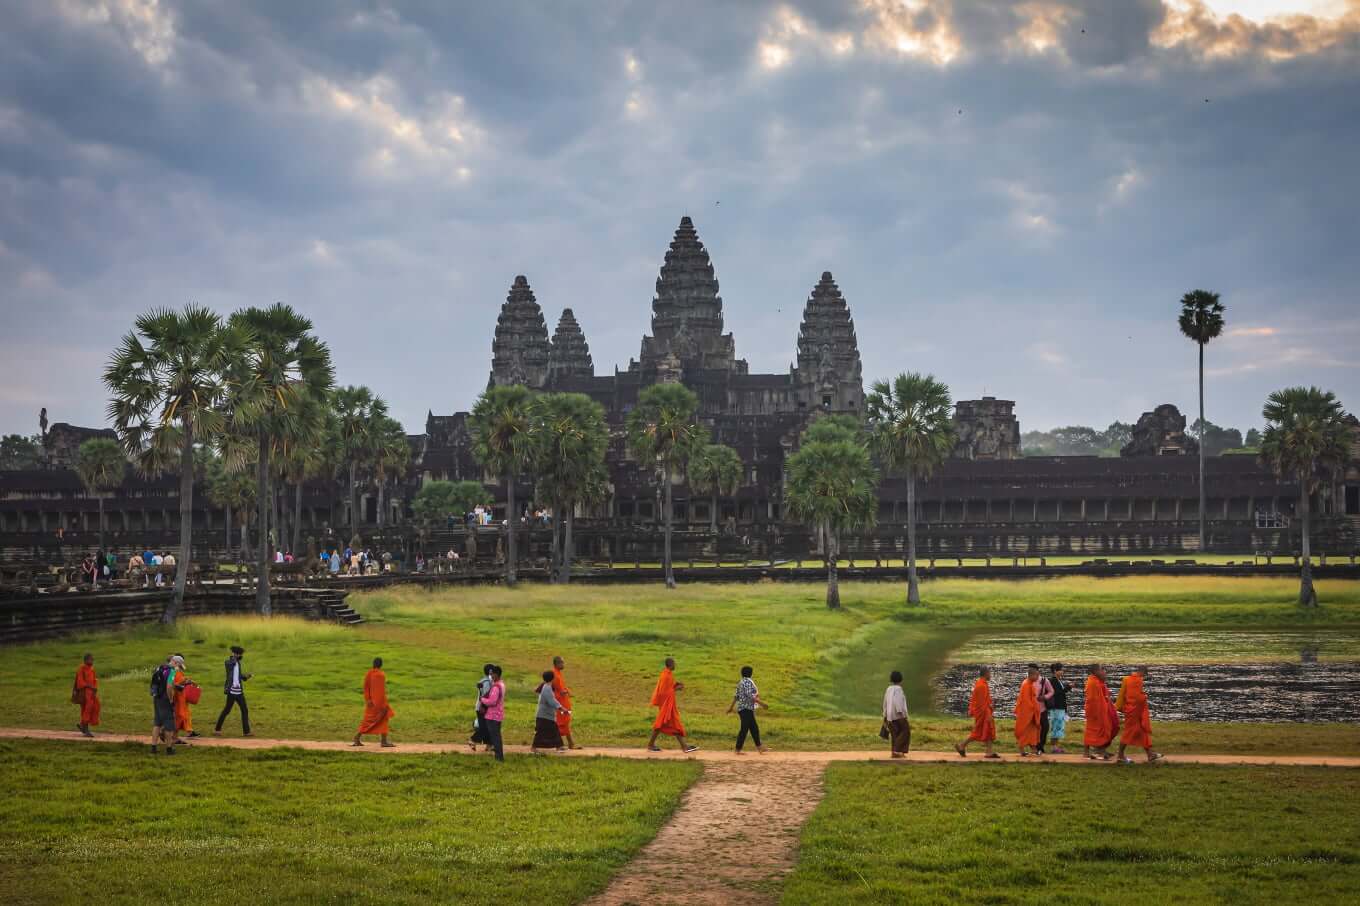 Authentic-Cambodia-Itinerary-11-days-angkor-wat-2.jpg